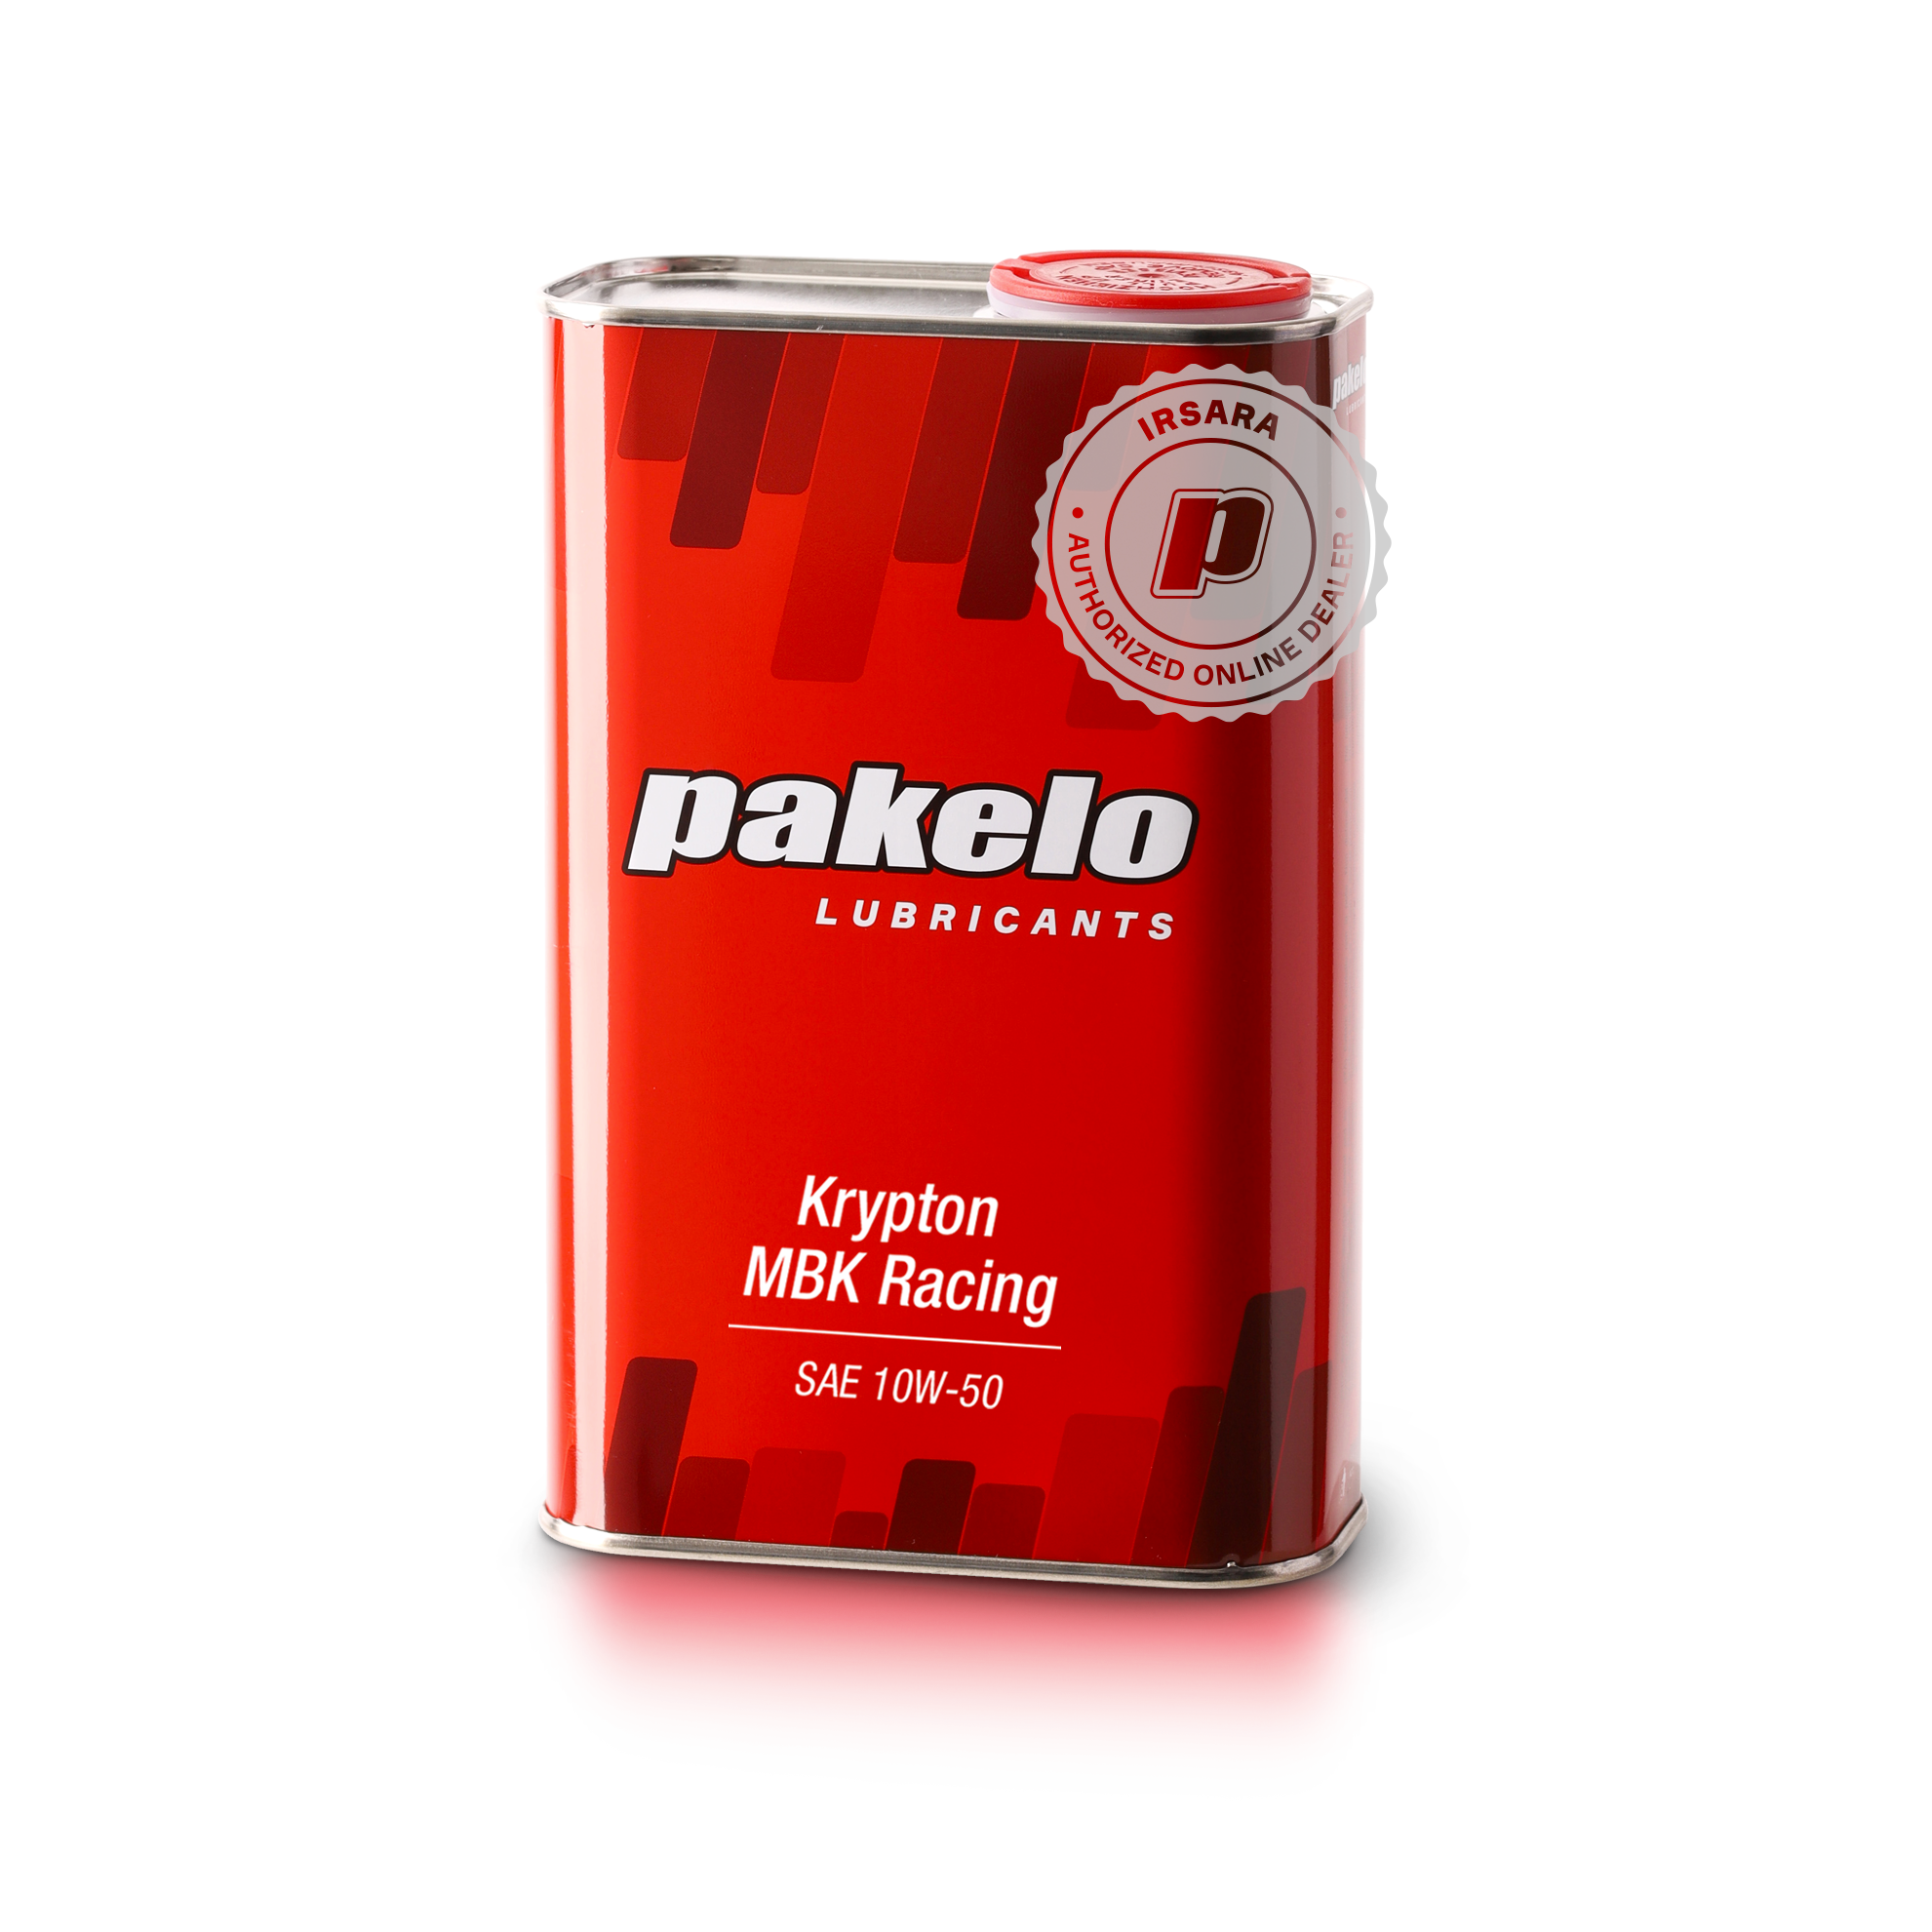 Pakelo Krypton Mbk Racing Sae 10W-50 1L